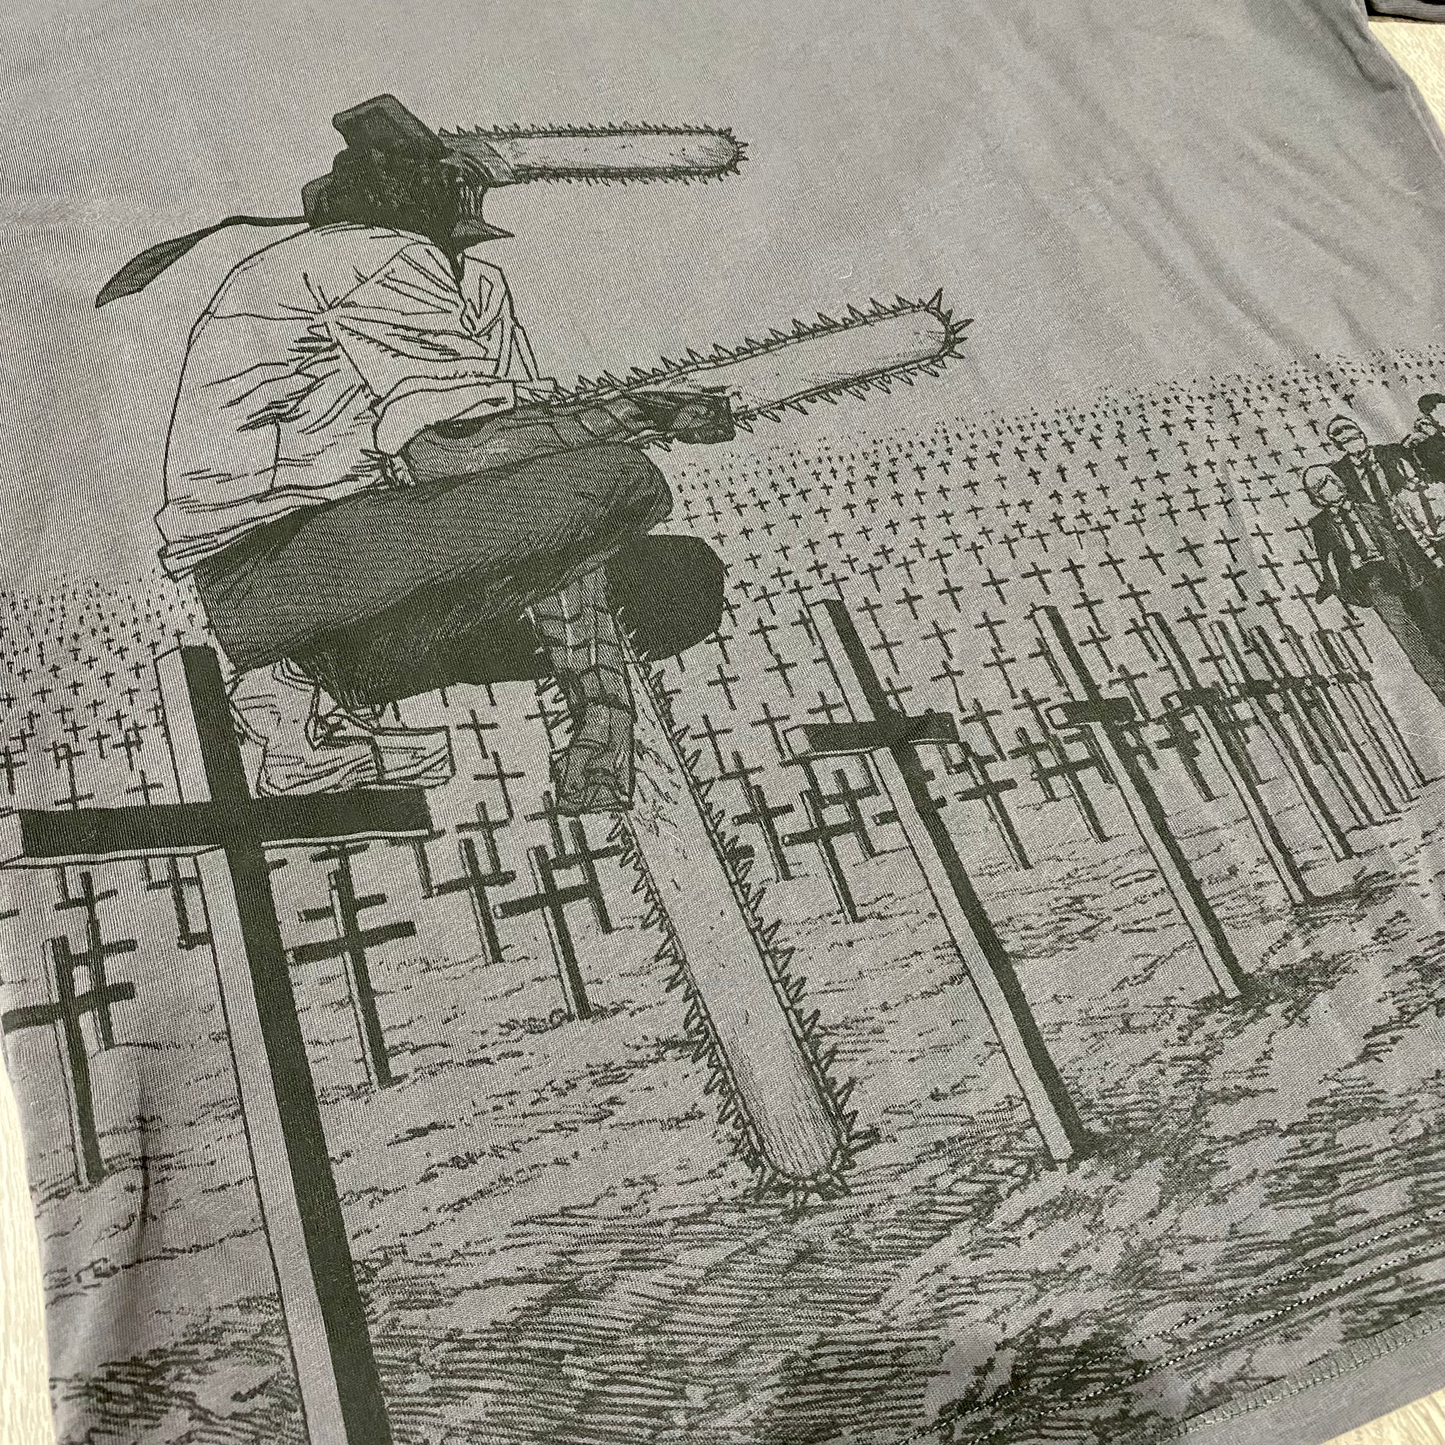 『Chainsaw-man』 "Chainsaw Graveyard" Graphic T-shirt